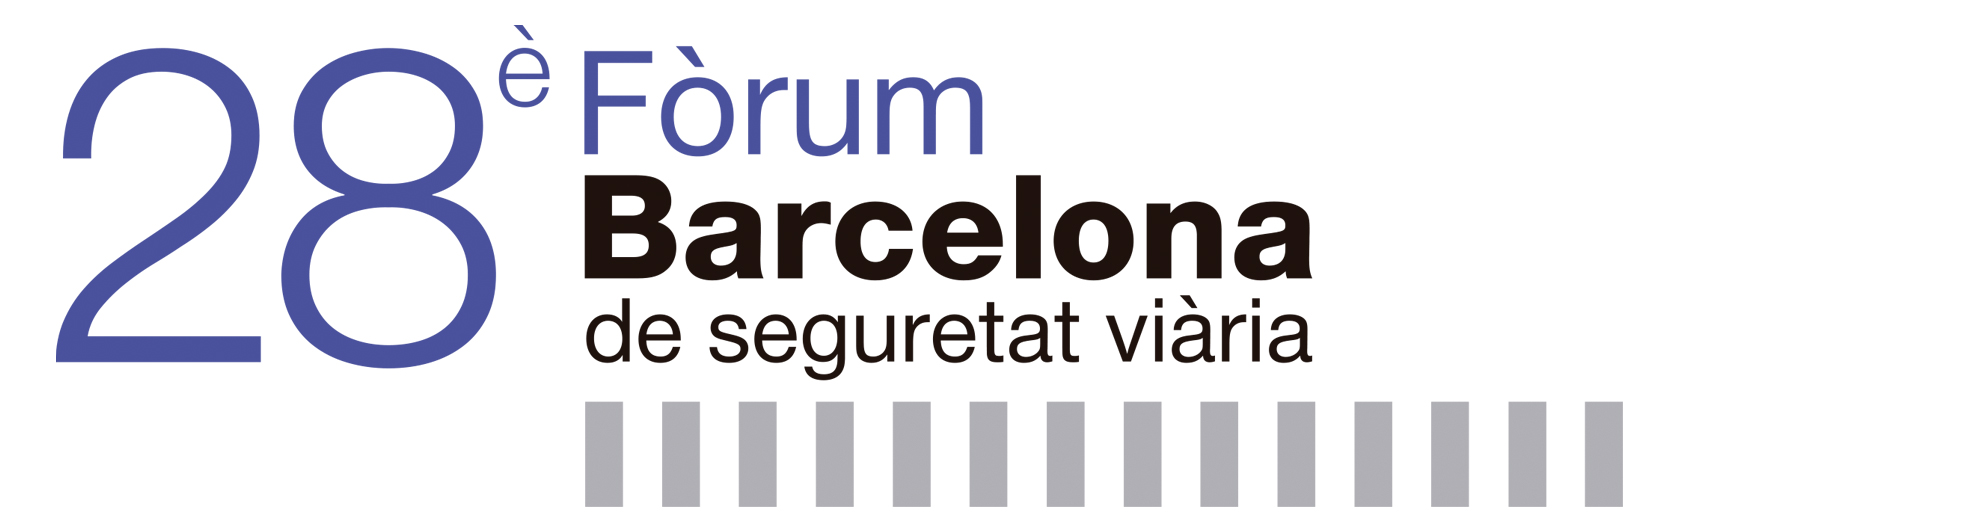 24è Fòrum Barcelona de seguretat viària